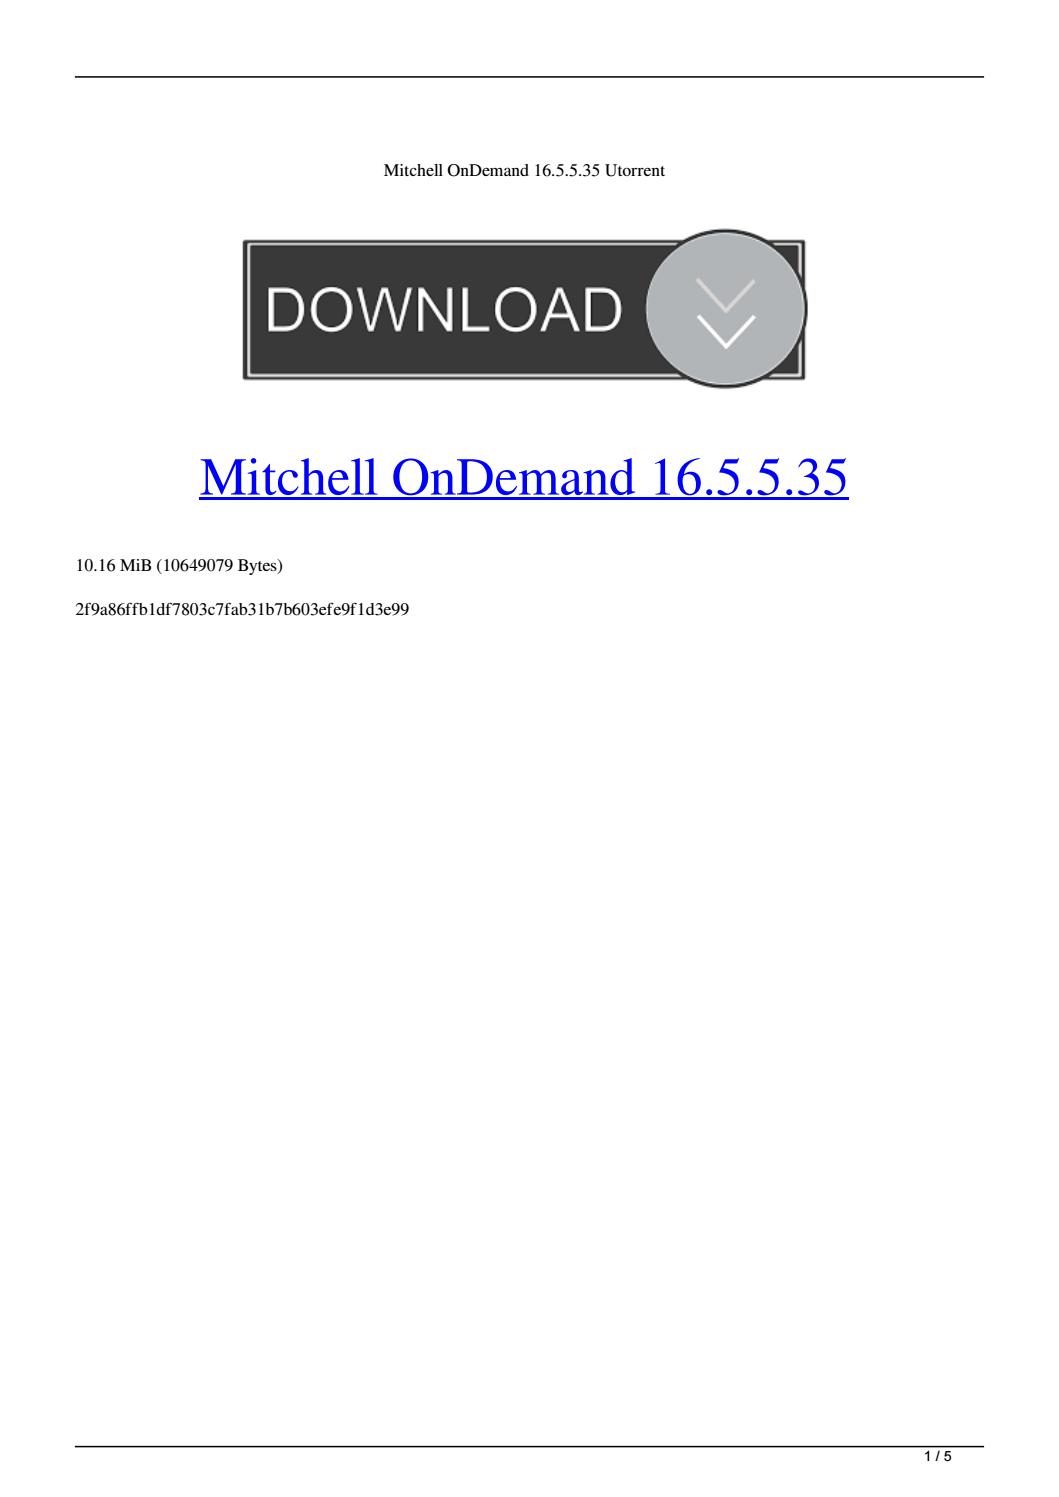 mitchell on demand torrent complete